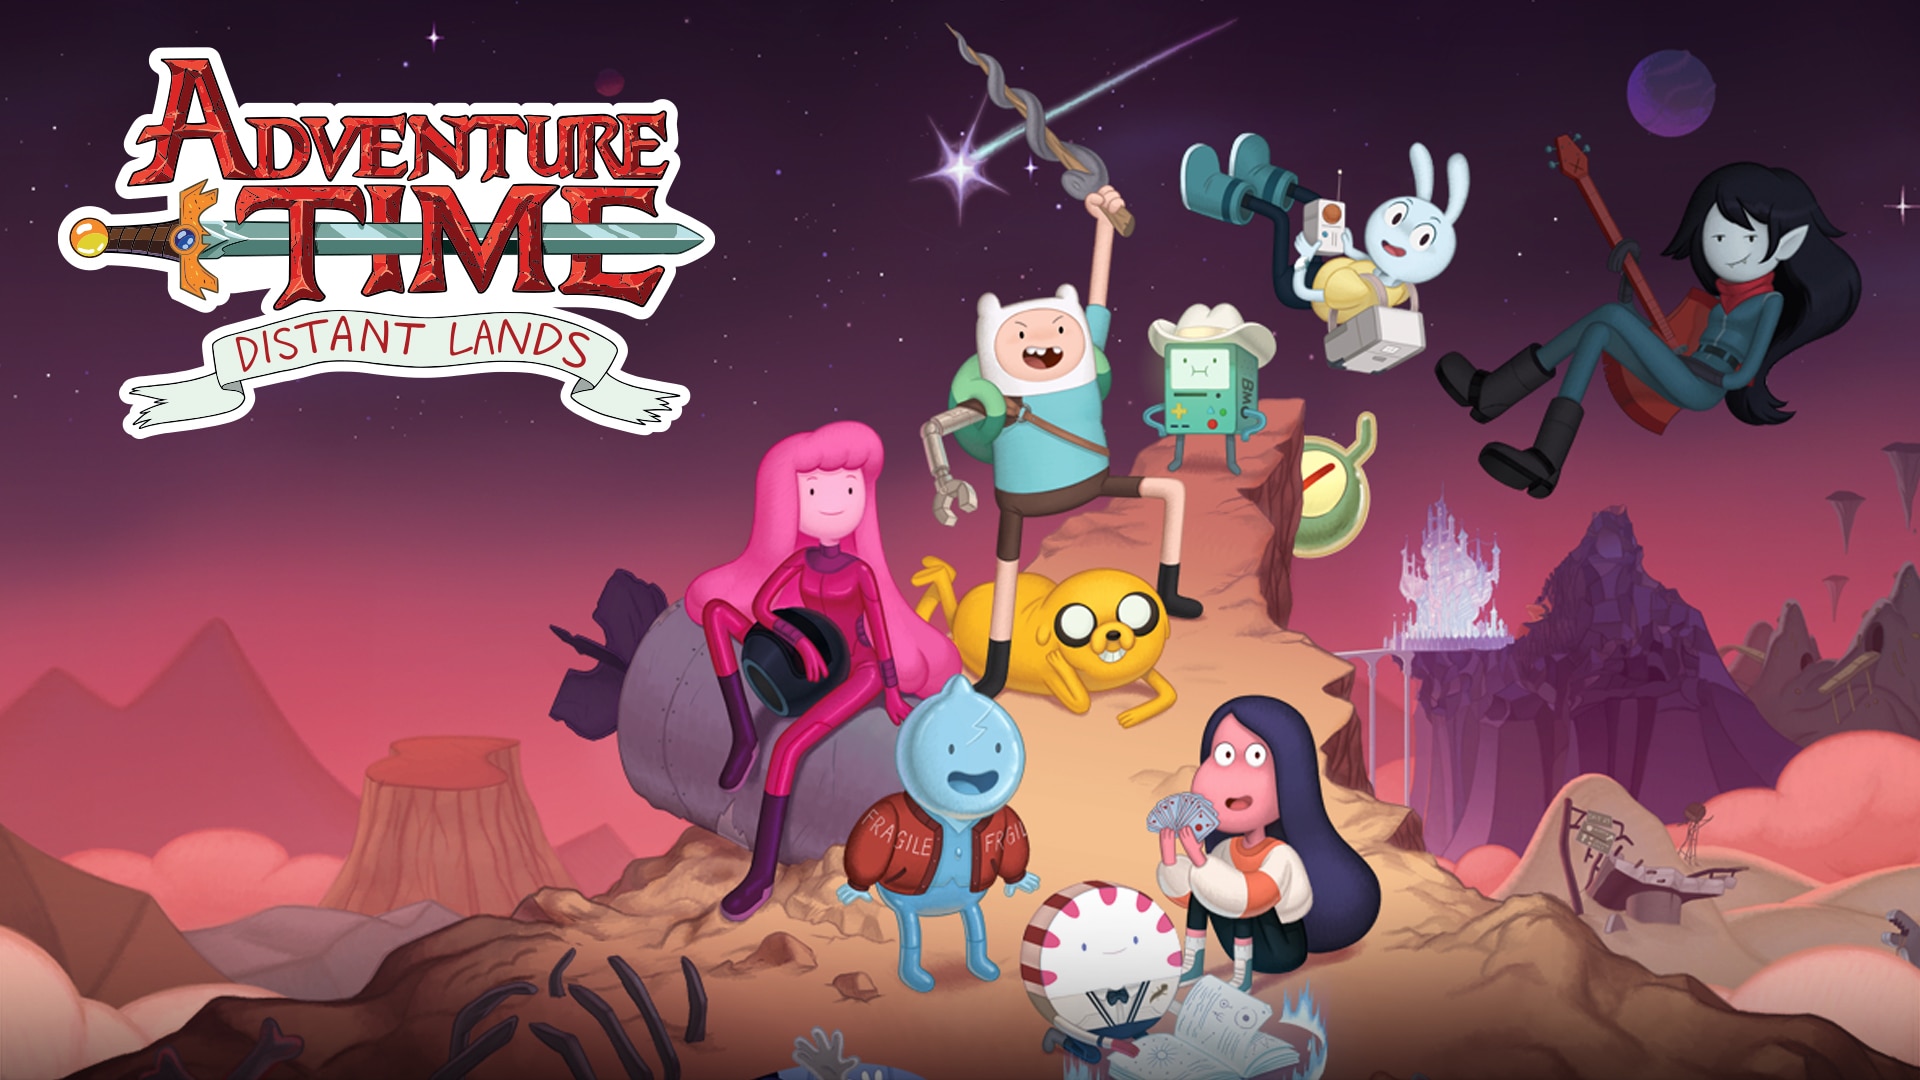 Adventure time was. Adventure time distant Lands Obsidian. Адвенчер тайм далекие земли. Adventure time distant Lands BMO. Финн далёкие земли.